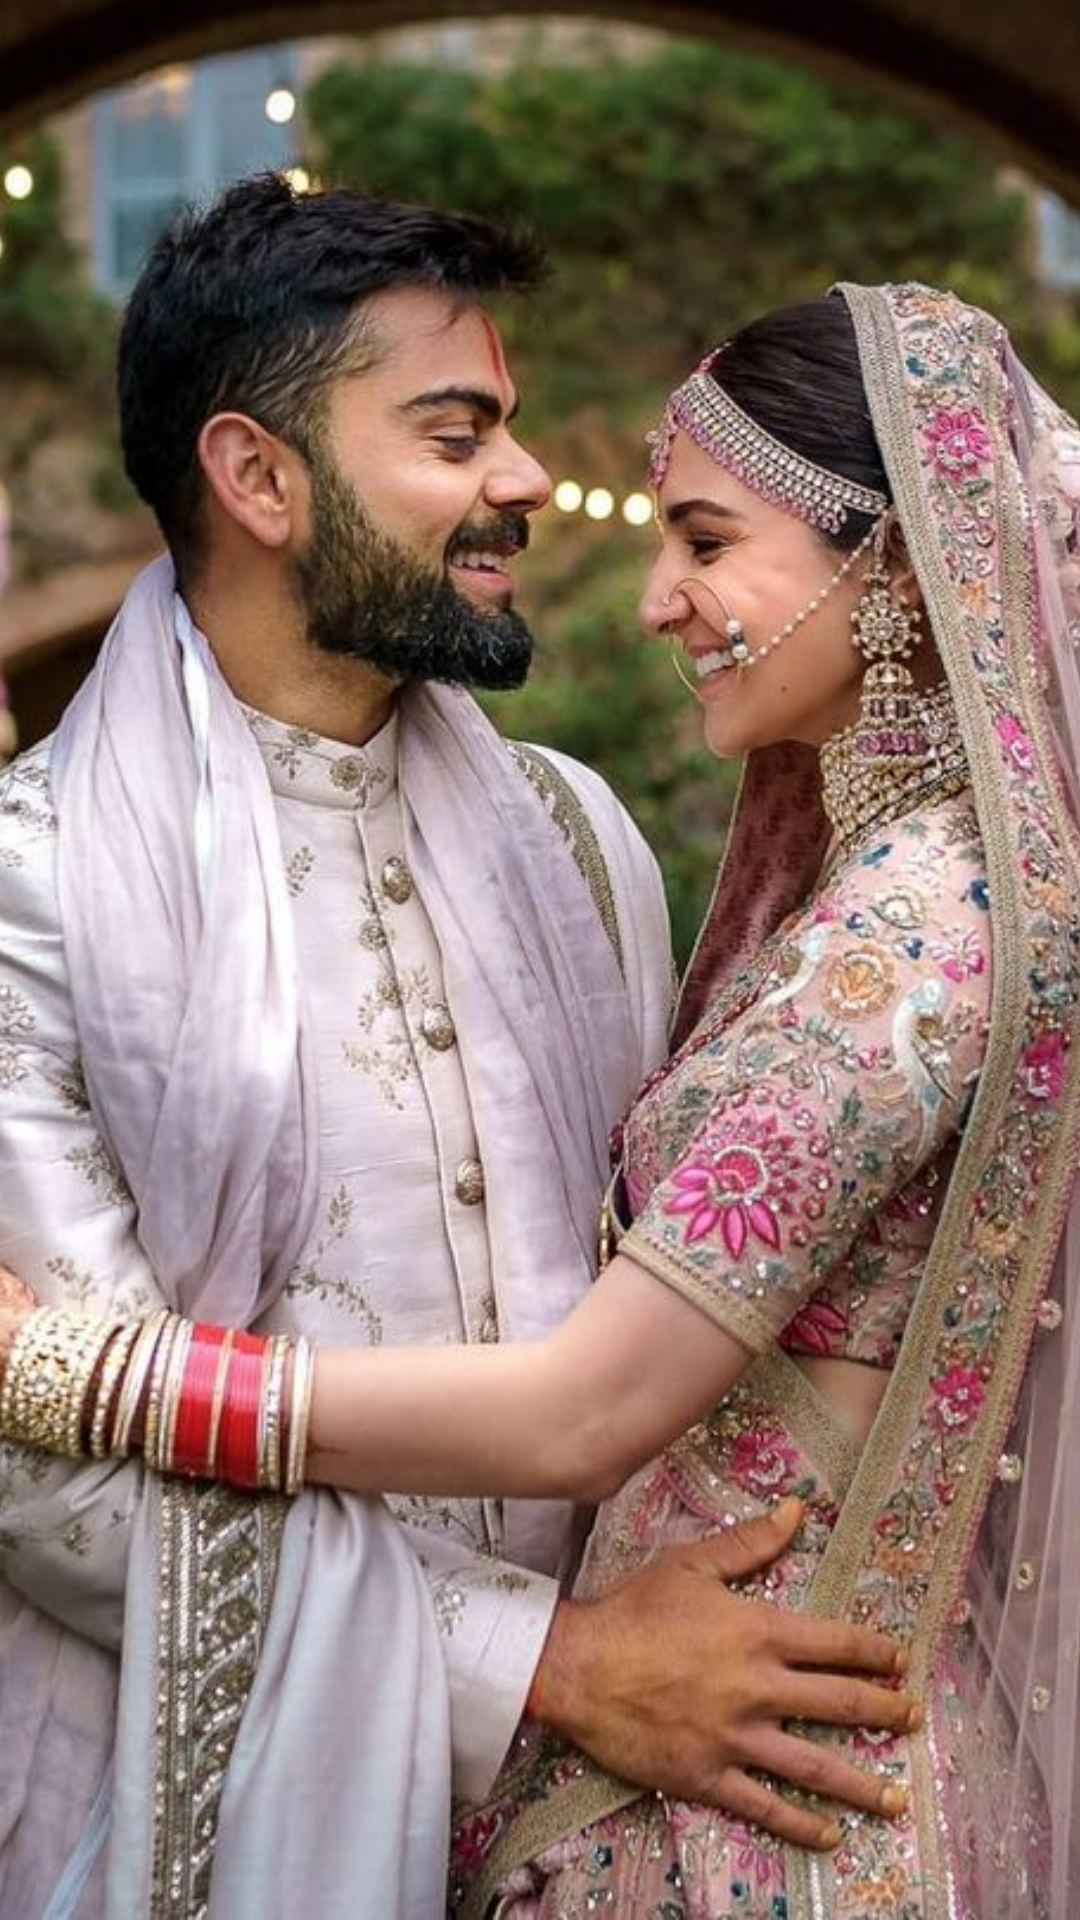 Surbhi Chandna, Karan Sharma share wedding pics from dreamy Jaipur ceremony  - Hindustan Times